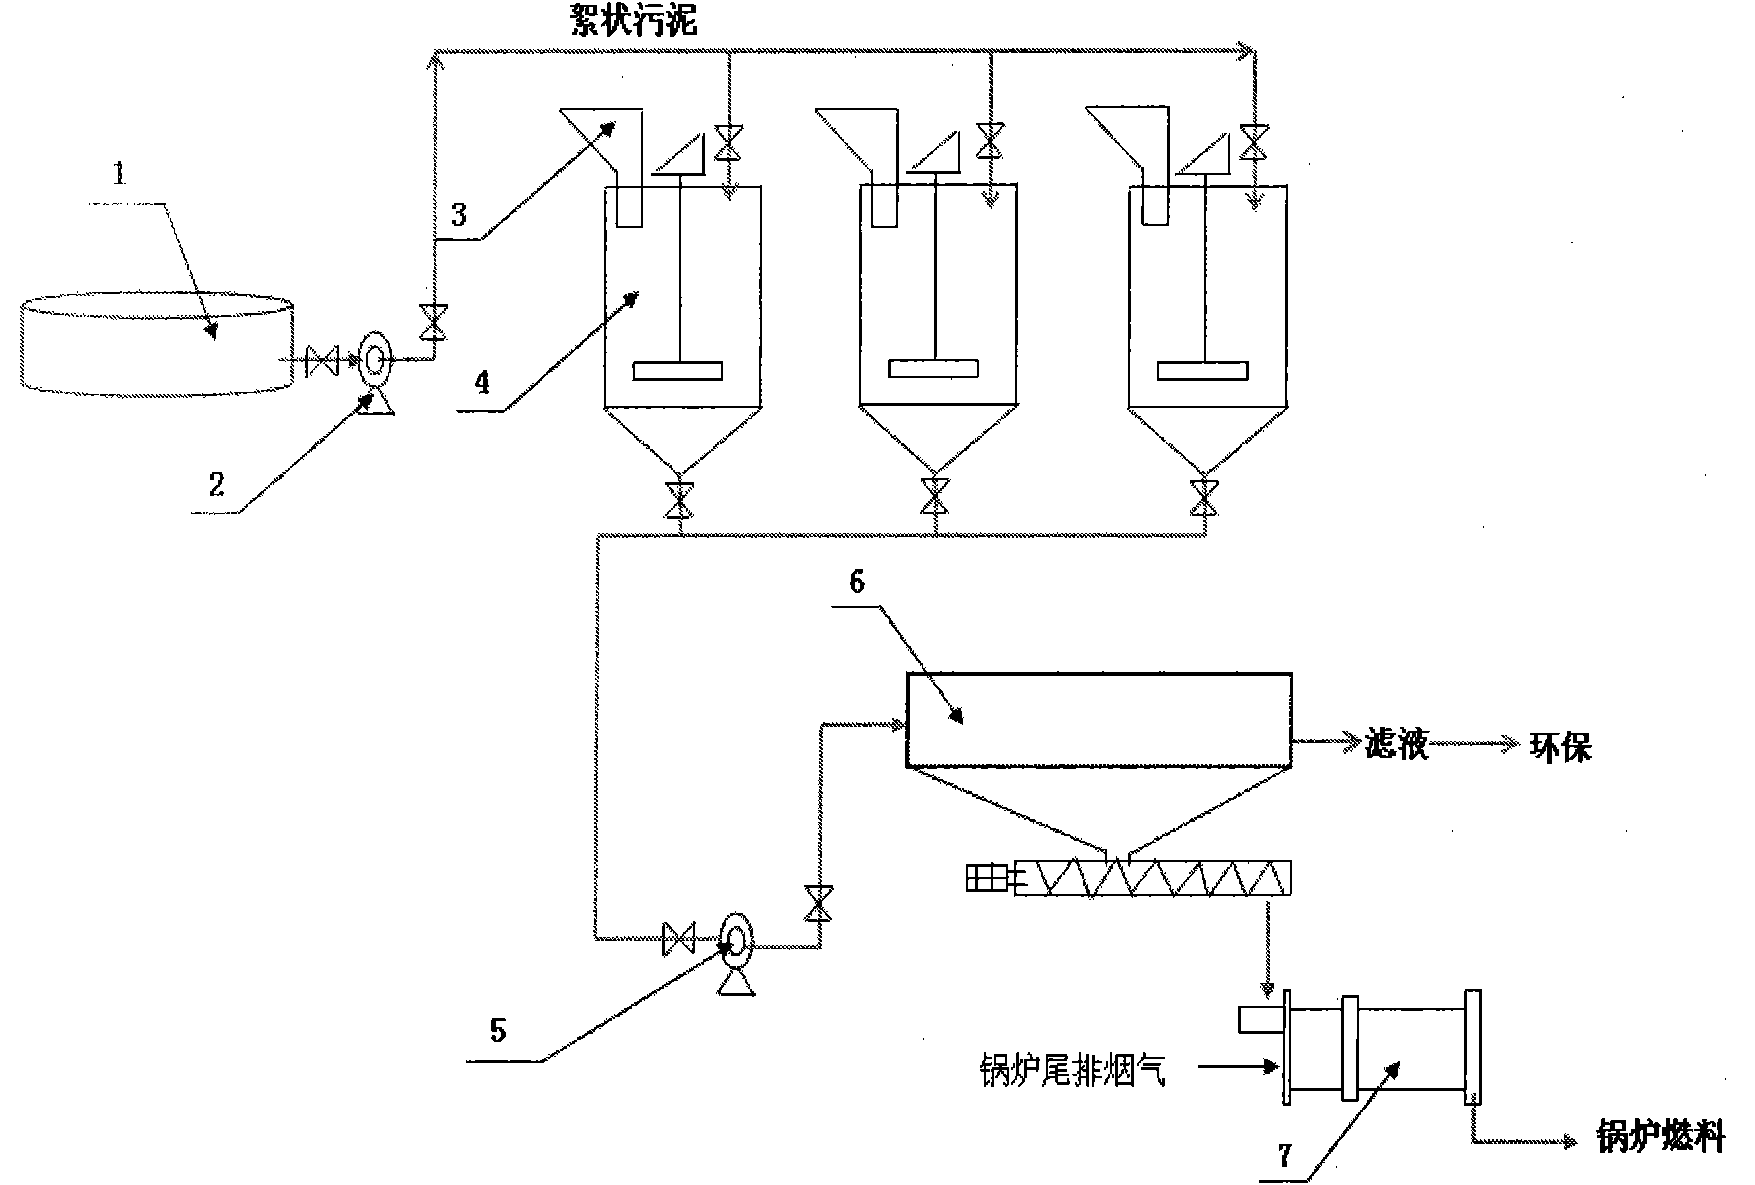 Process method for preparing boiler fuels from citric acid industrial flocculent sludge